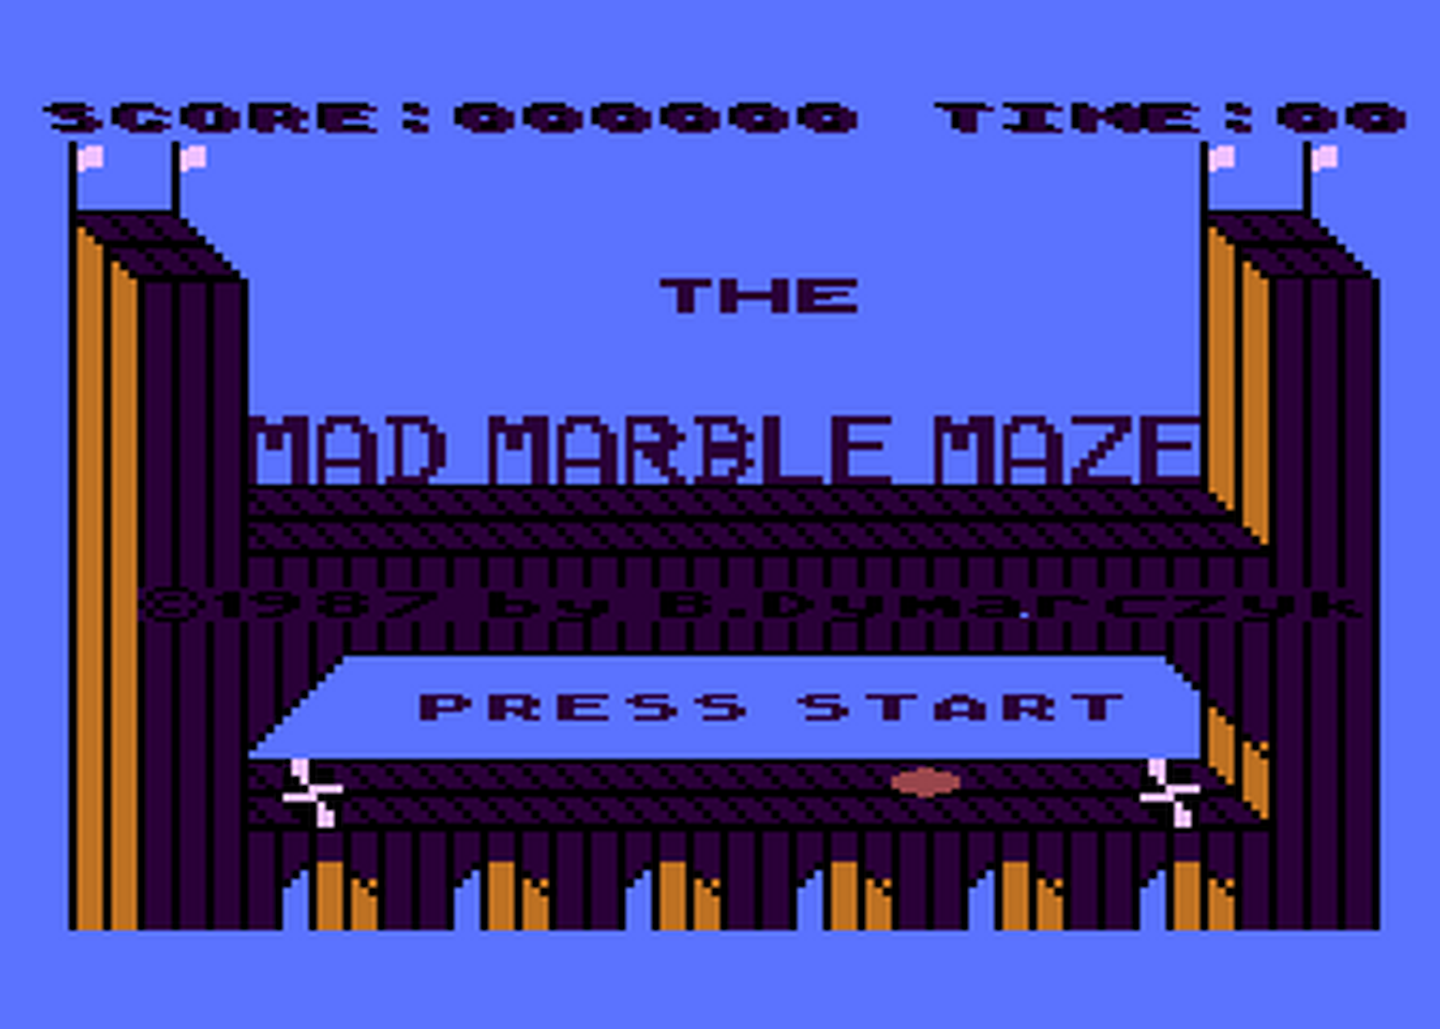 Atari GameBase Mad_Marble_Maze,_The Atari_Magazin 1987